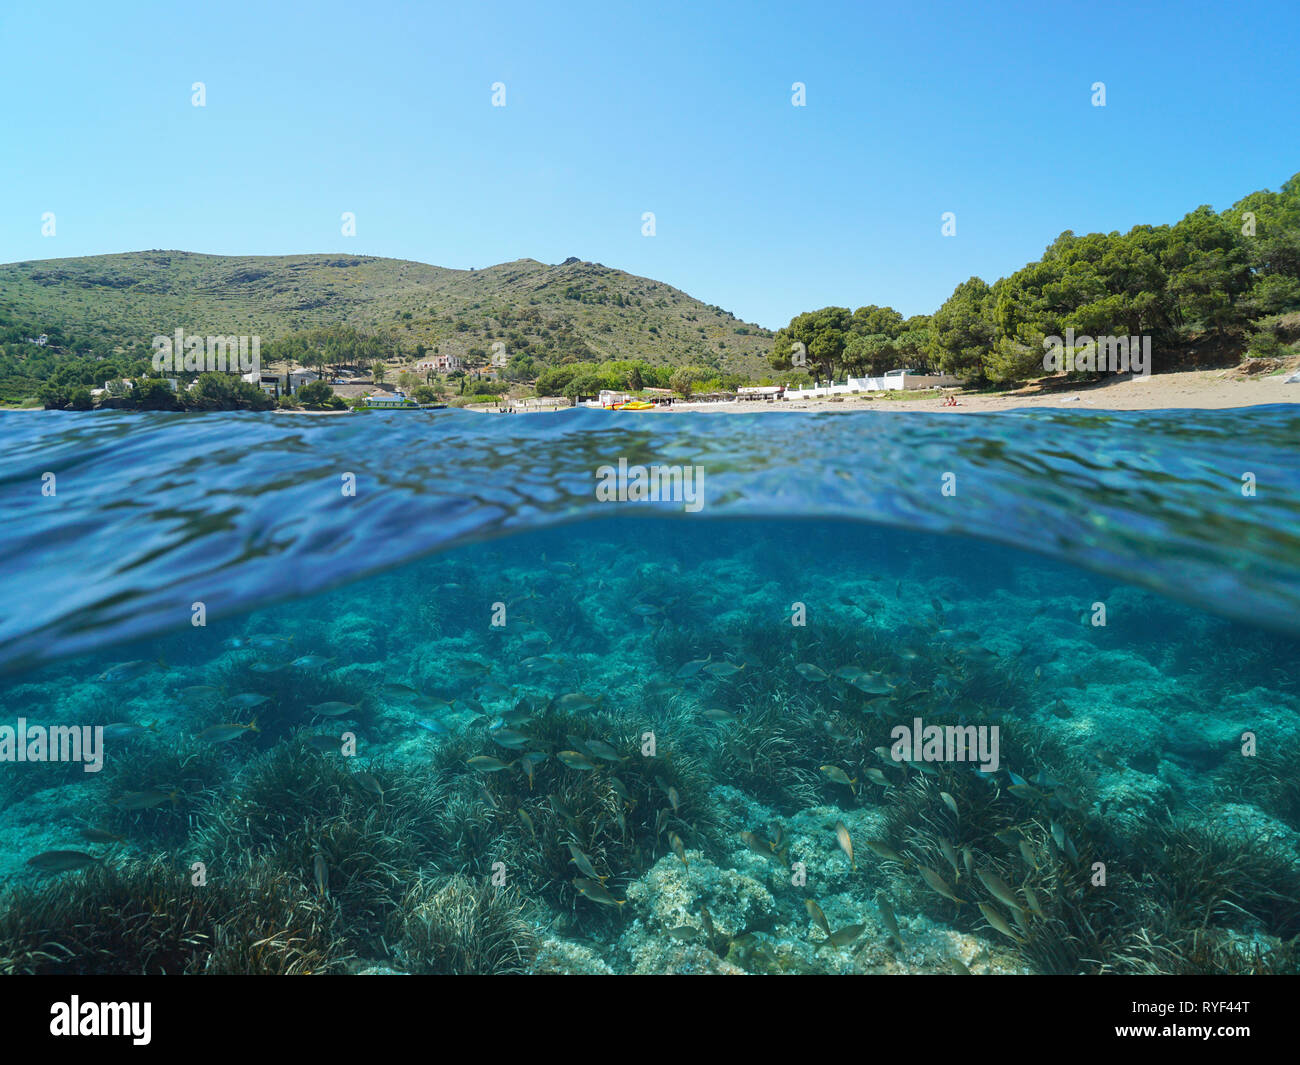 Spain Costa Brava coastline with fish and seagrass underwater, Mediterranean sea, Cala Montjoi, Roses, Catalonia, split view half over and under water Stock Photo